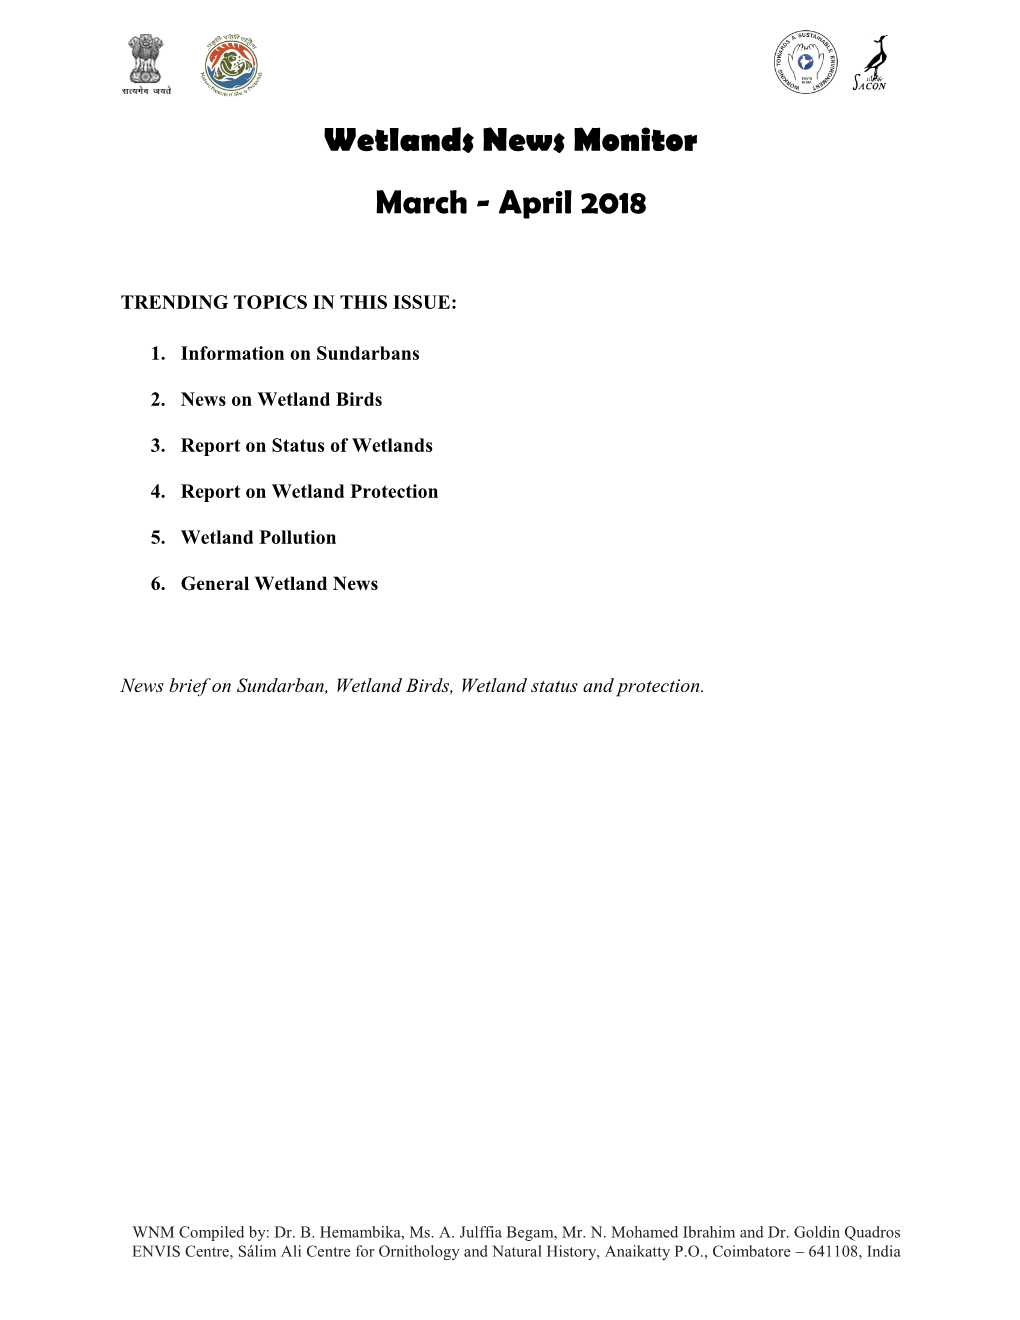 Wetlands News Monitor March - April 2018